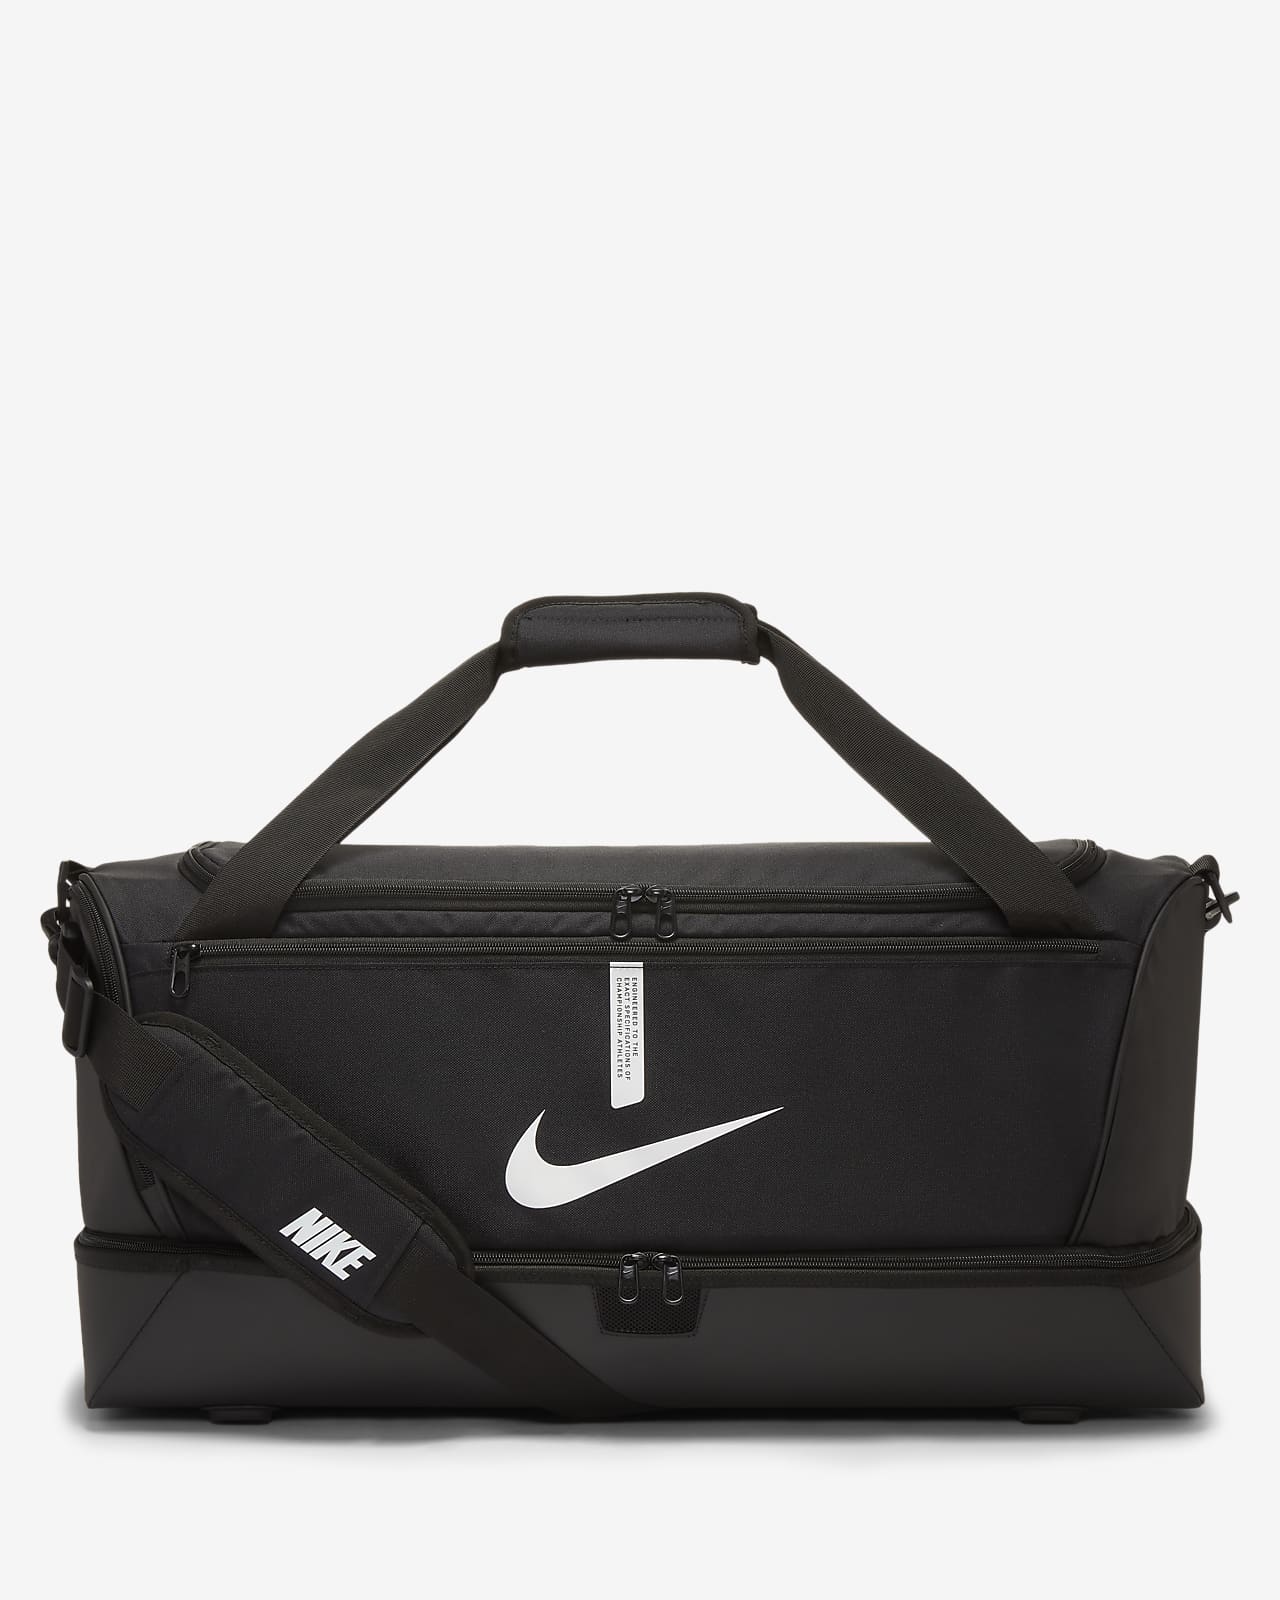 Nike Academy Team Football Hardcase Duffel Bag (Large, 59L). Nike DK